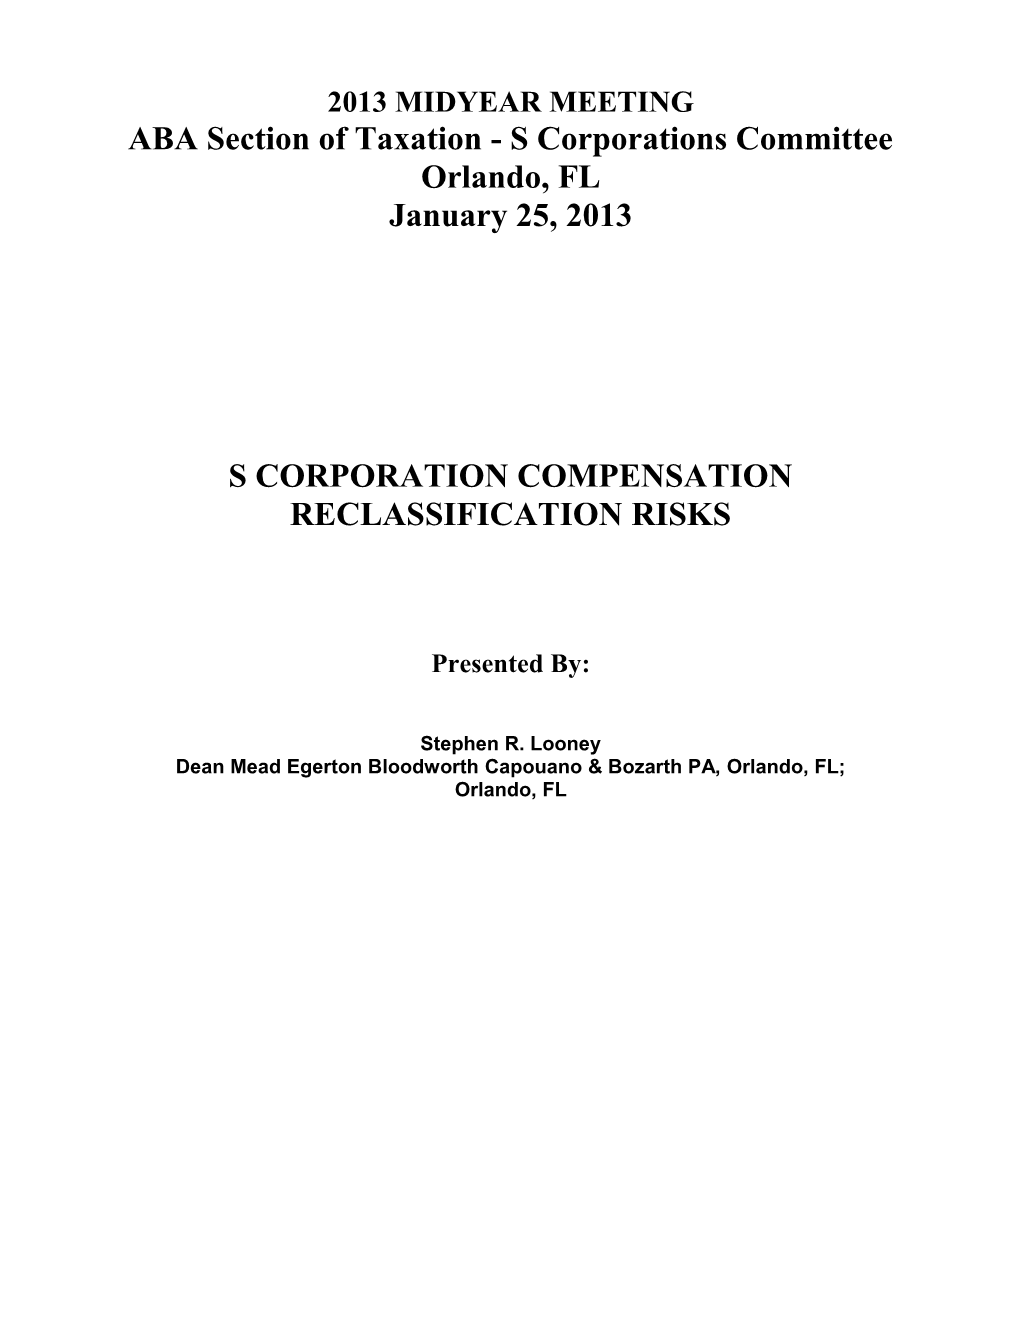 S Corporation Compensation Reclassification Risks (O0809266.DOCX;1)